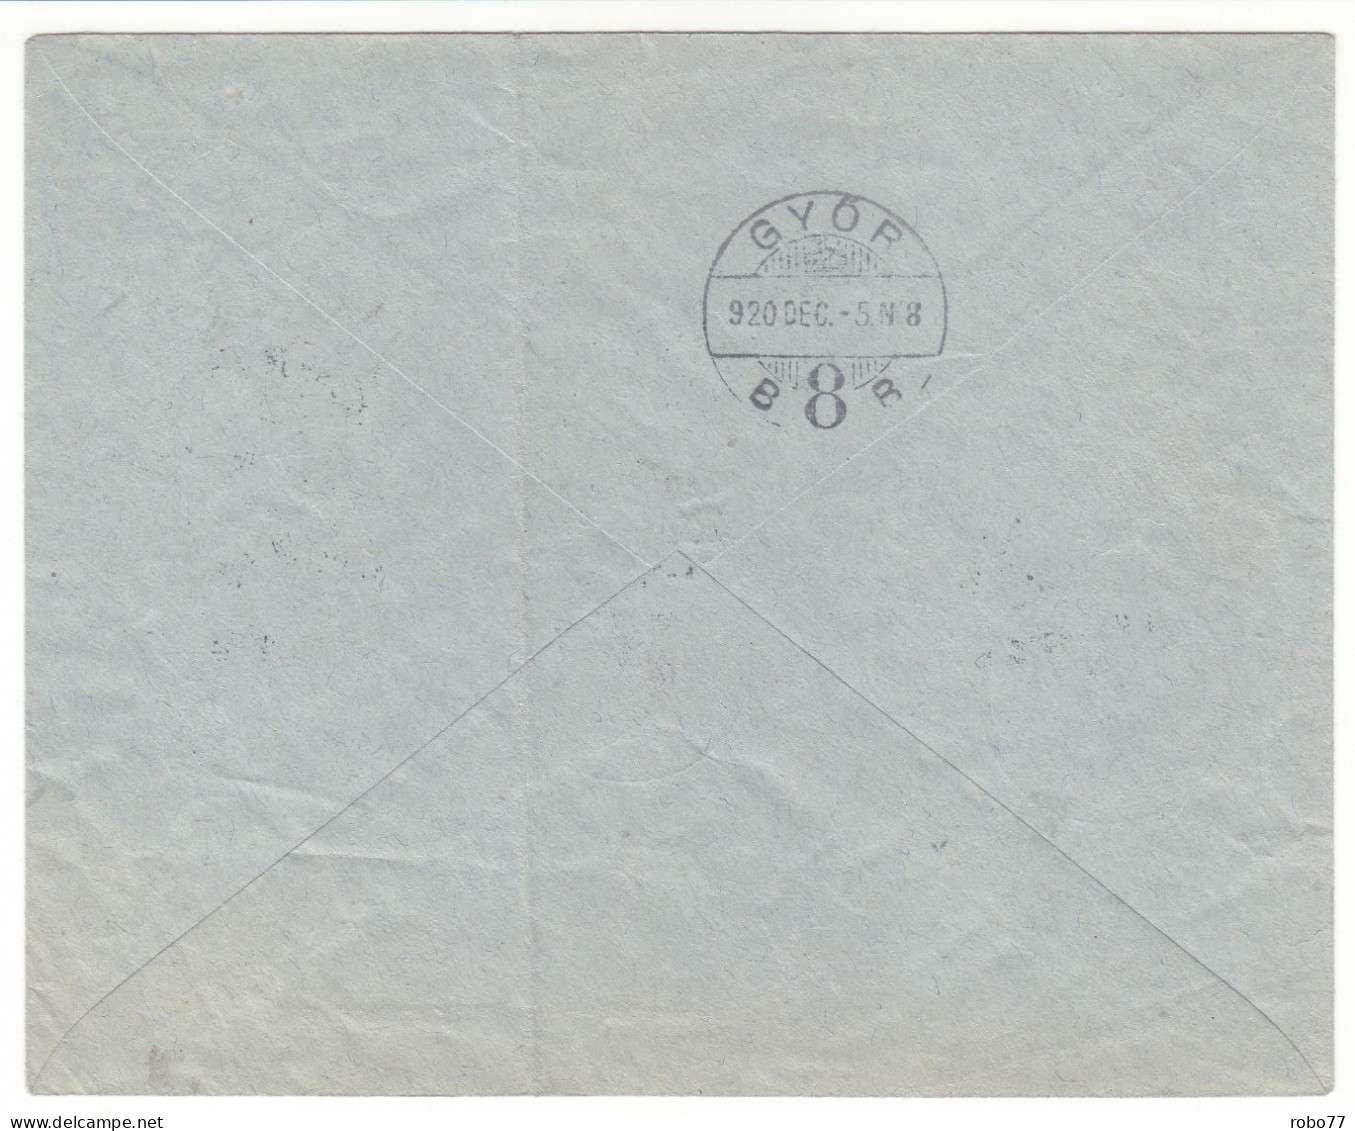 1920 Hungary Air Mail Multifranked Cover, Letter. LEGI POSTA. Budapest, Gyor. Overprint Stamps. (G13c259) - Cartas & Documentos